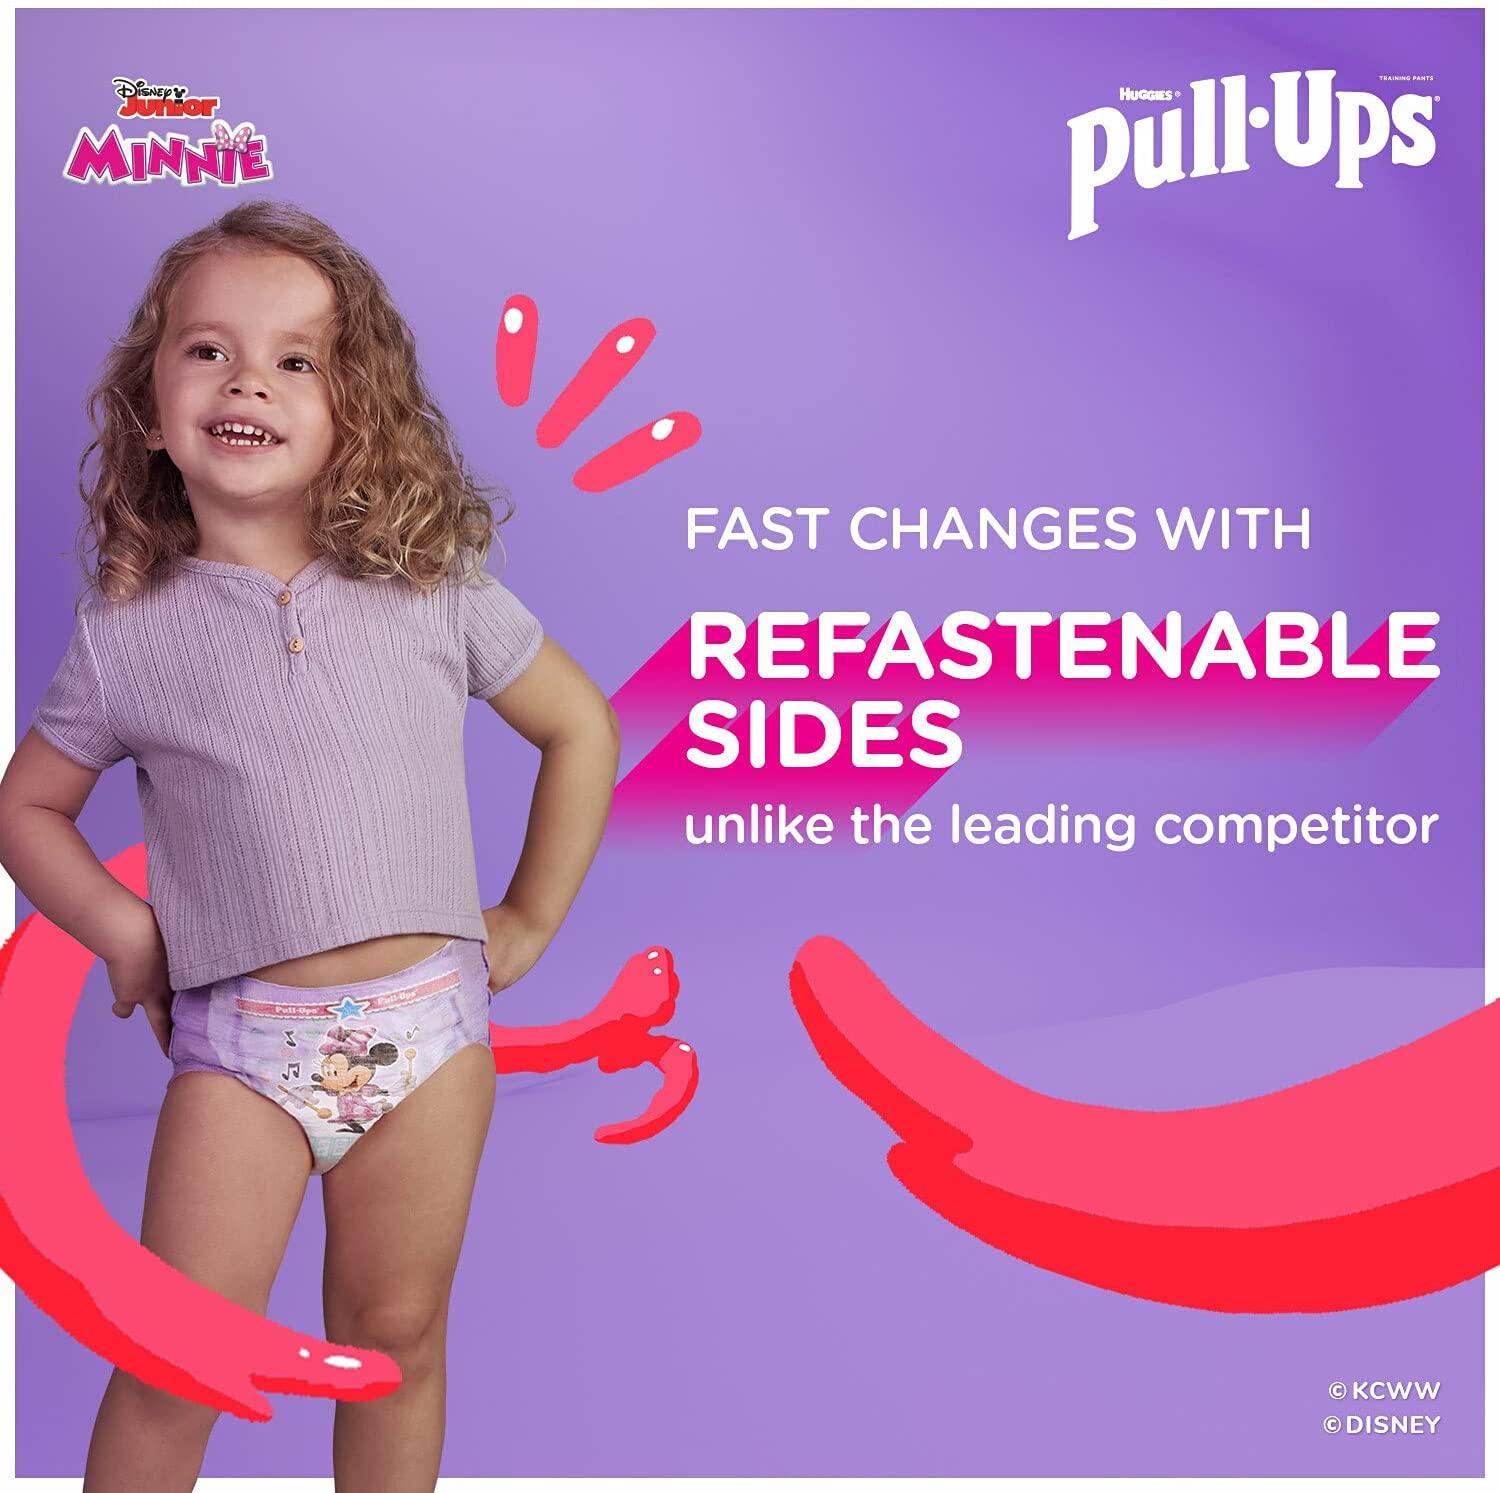  Pull-Ups Girls' Nighttime Potty Training Pants, Training  Underwear, 3T-4T (32-40 lbs), 60 Ct : Baby